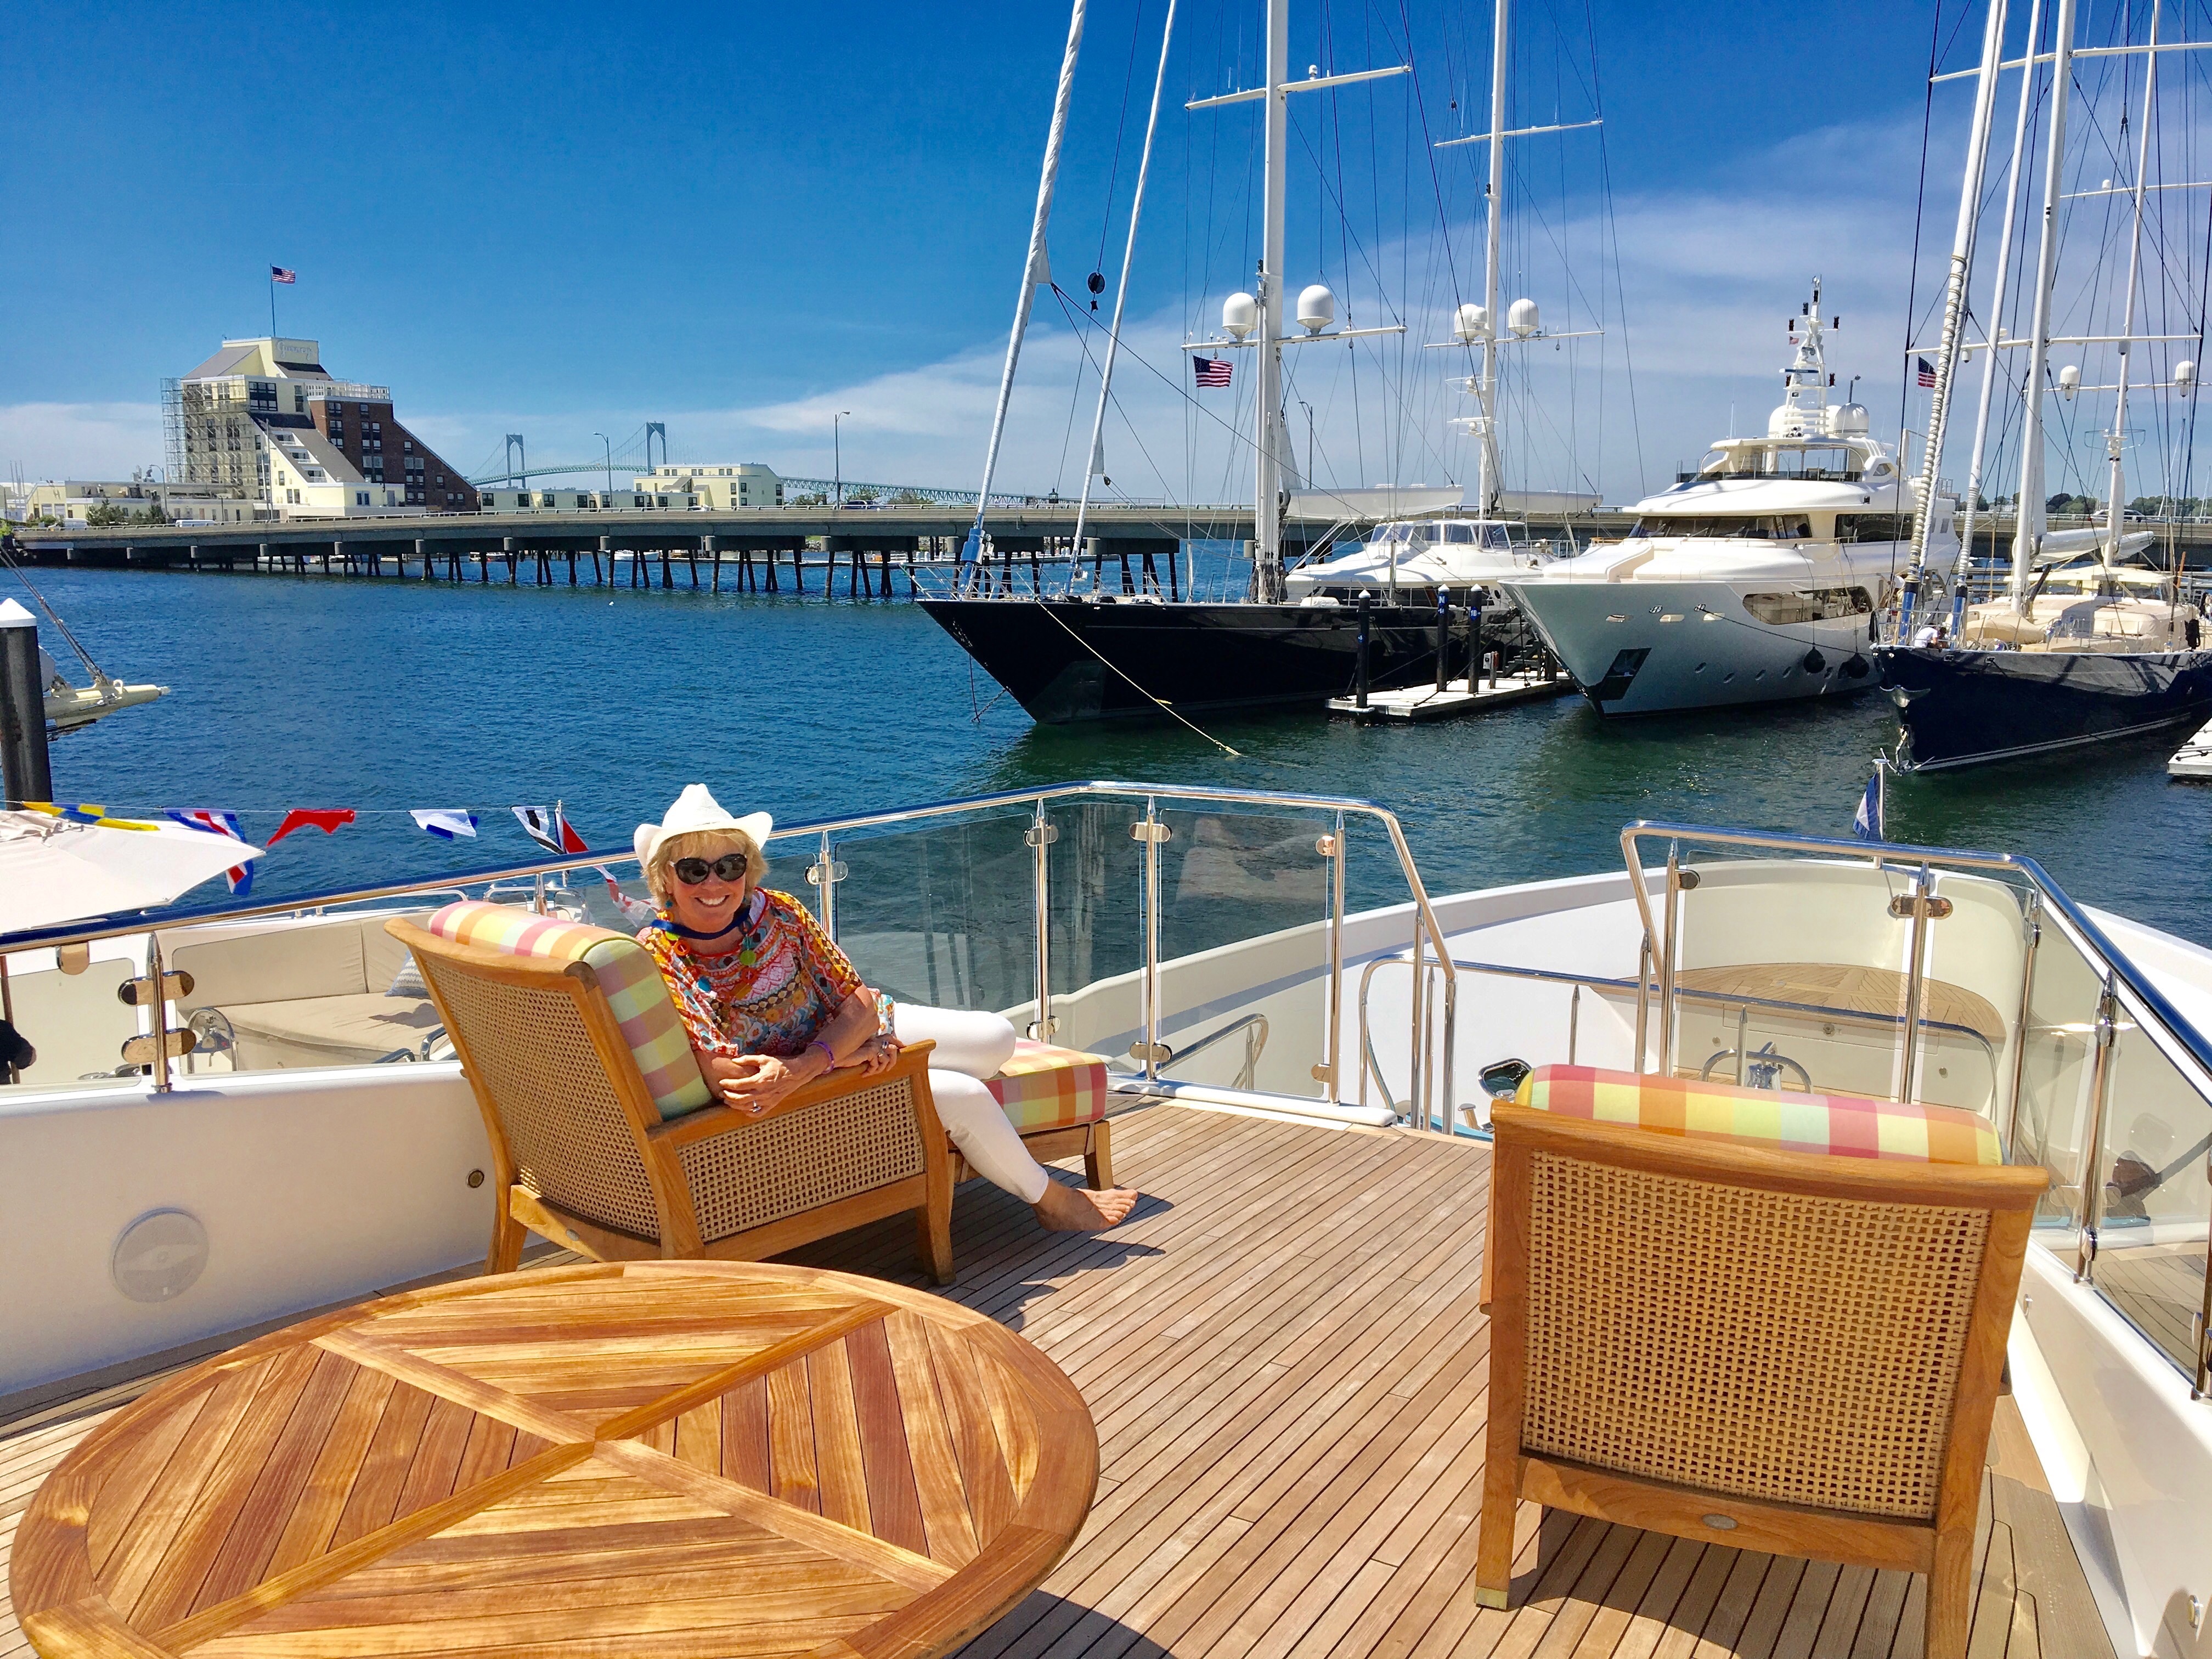 Carol Kent in a comfy chair on board a yacht deck in Newport, Rhode Island